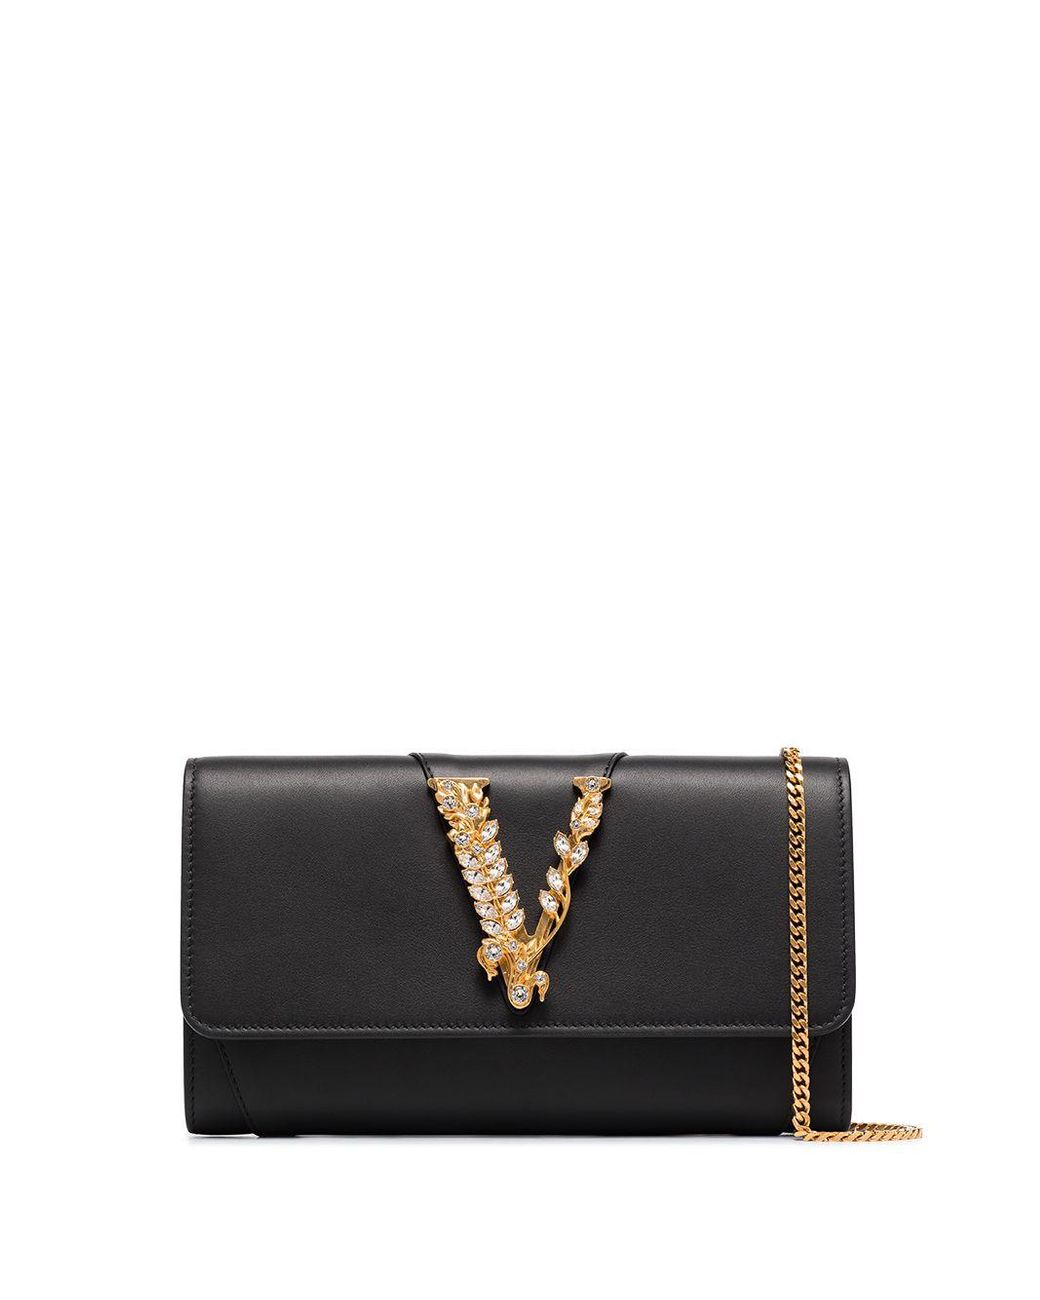 Versace Virtus Crystal Embellished Clutch Bag in Black | Lyst